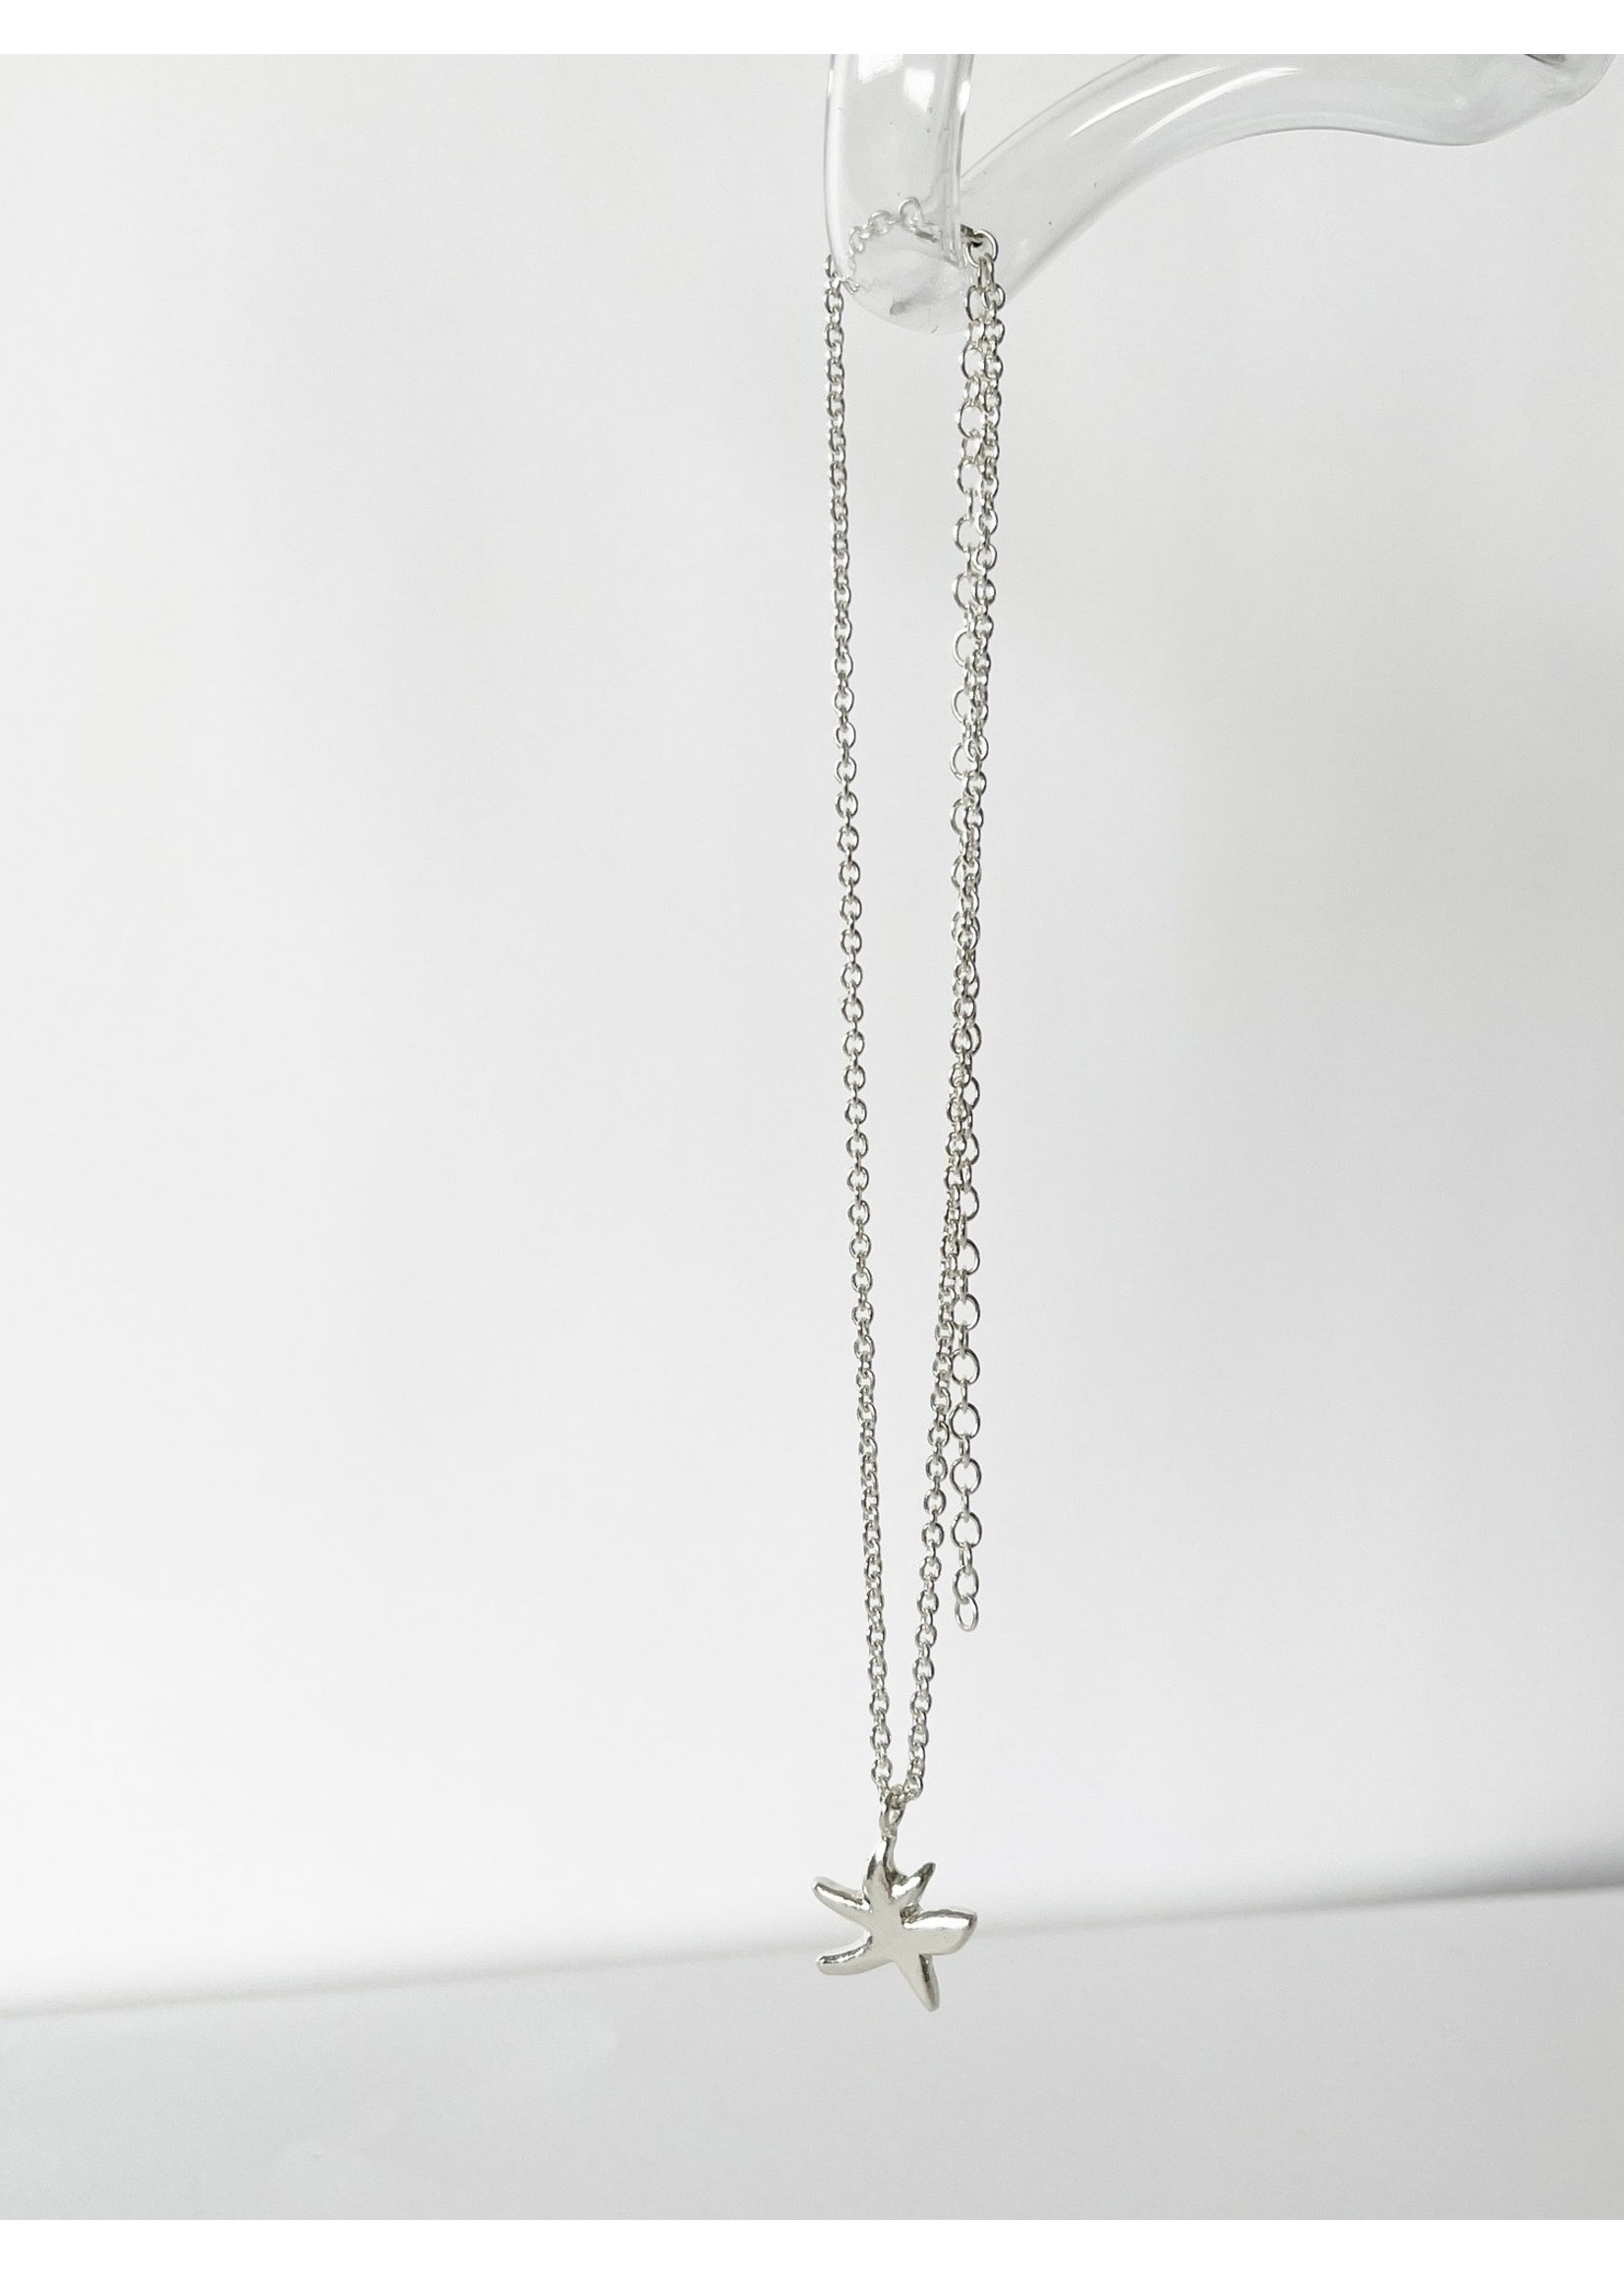 Marmo Marmo Jewelry "Longue Vie" Necklace